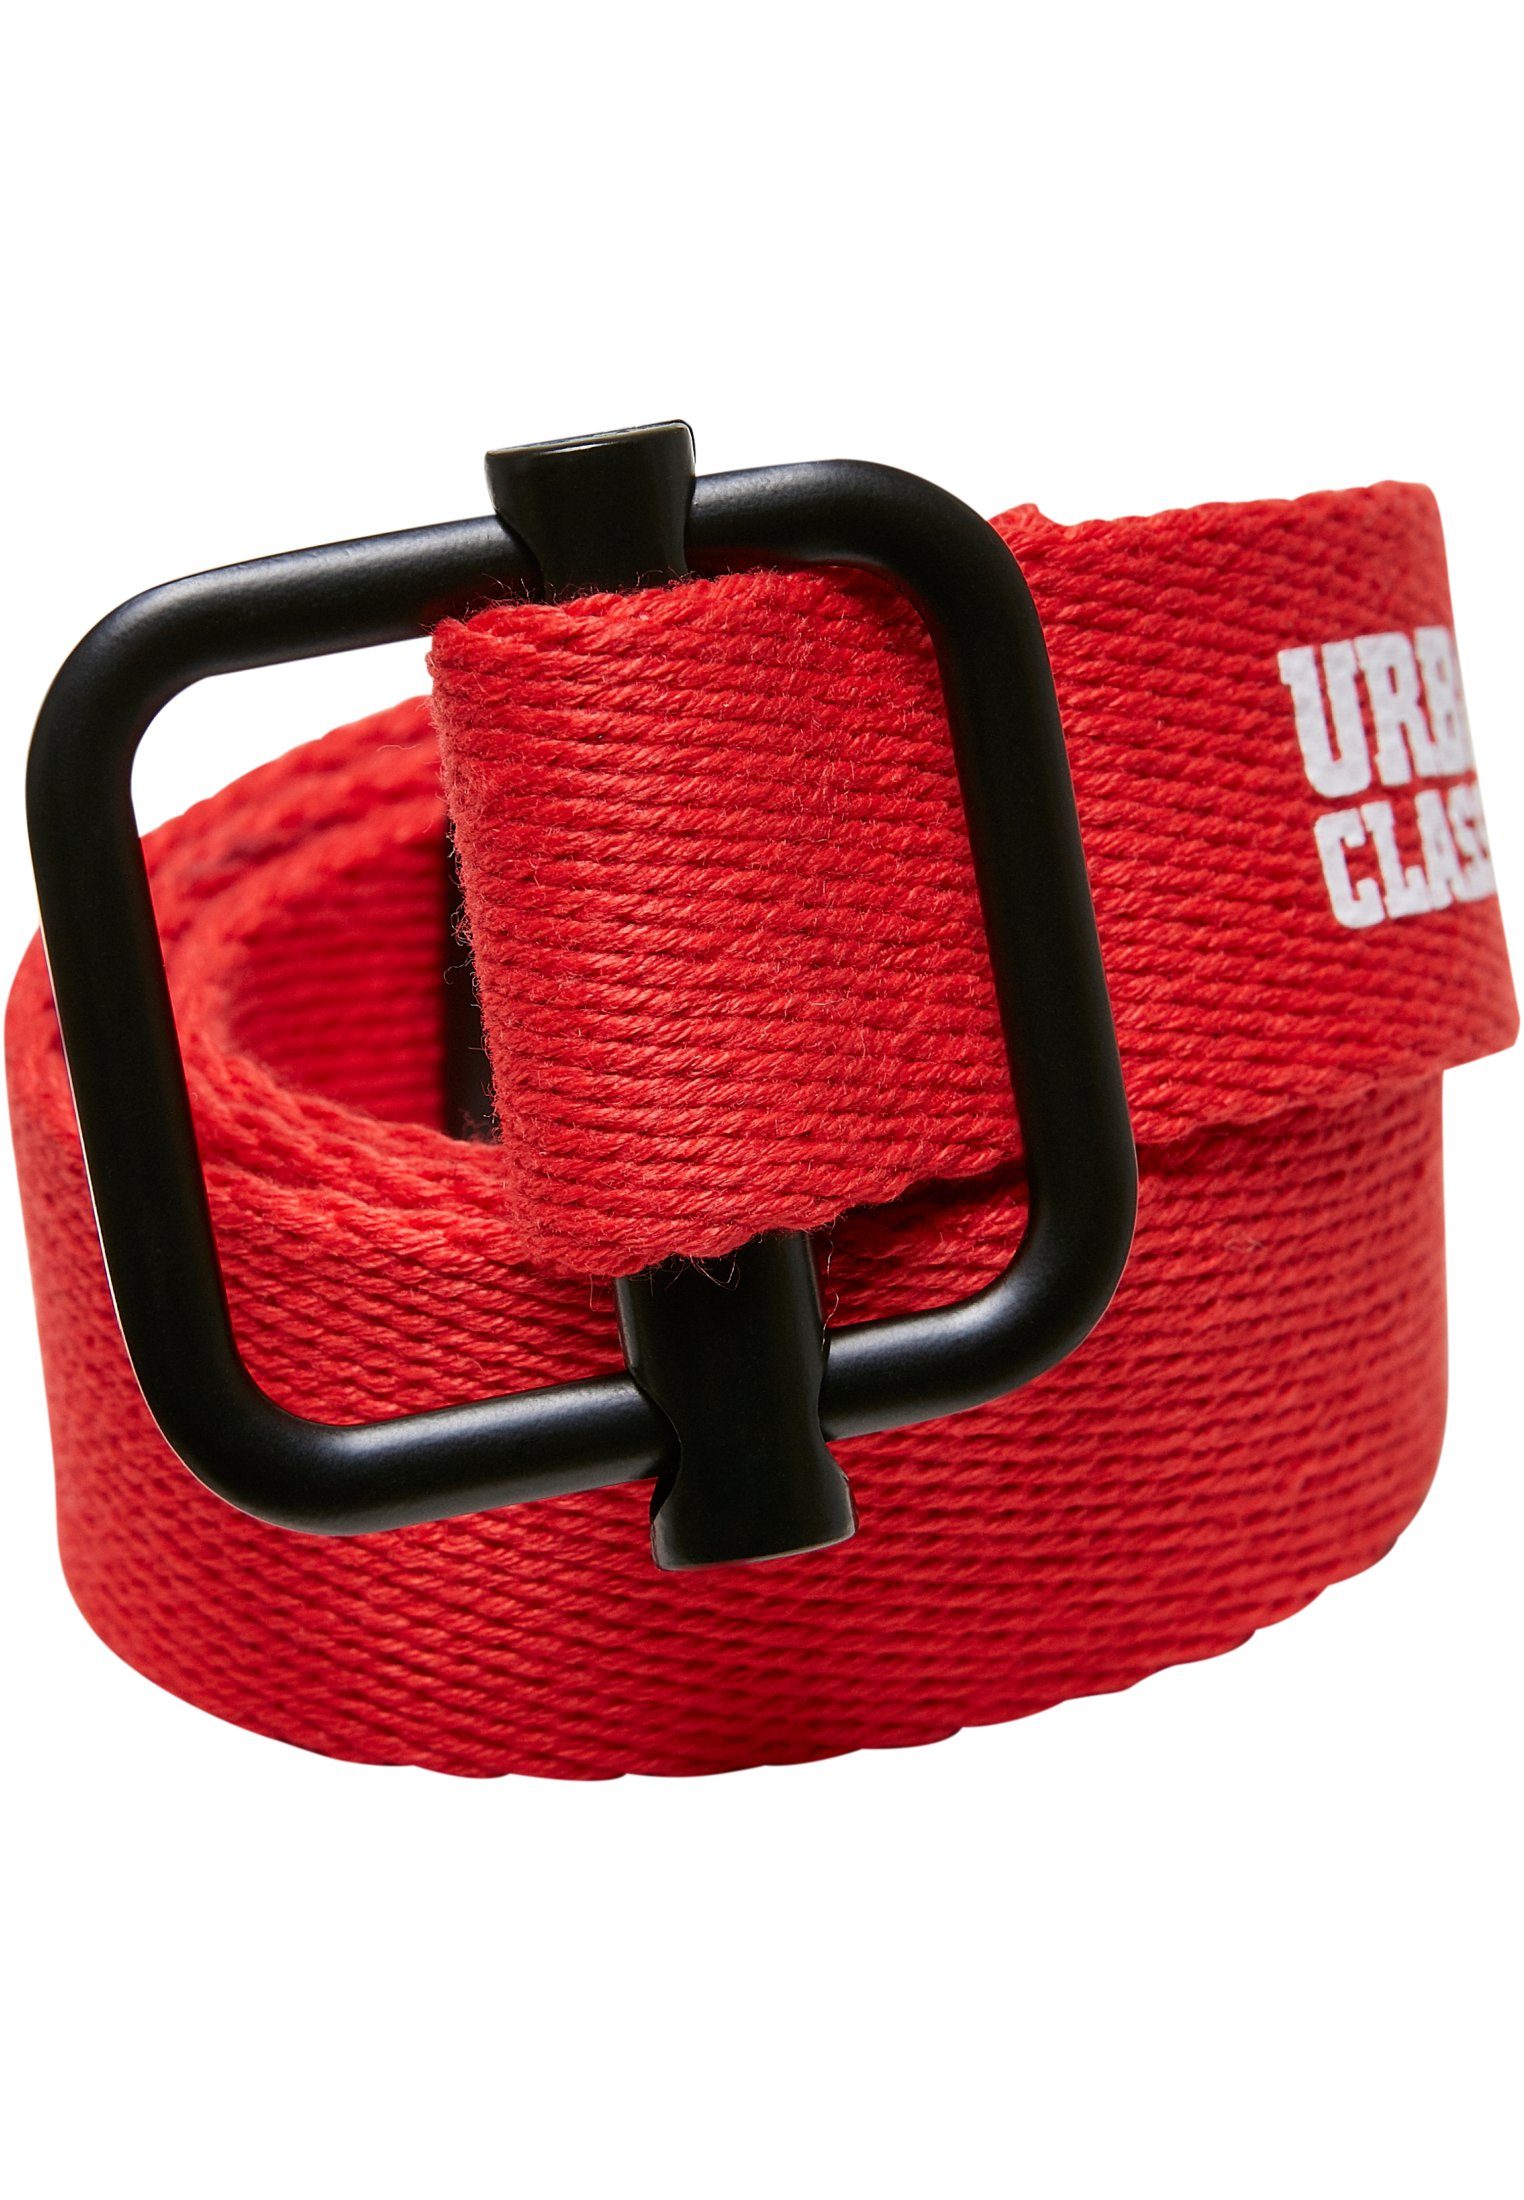 URBAN CLASSICS Hüftgürtel Accessoires black-red Canvas Industrial Belt Kids 2-Pack